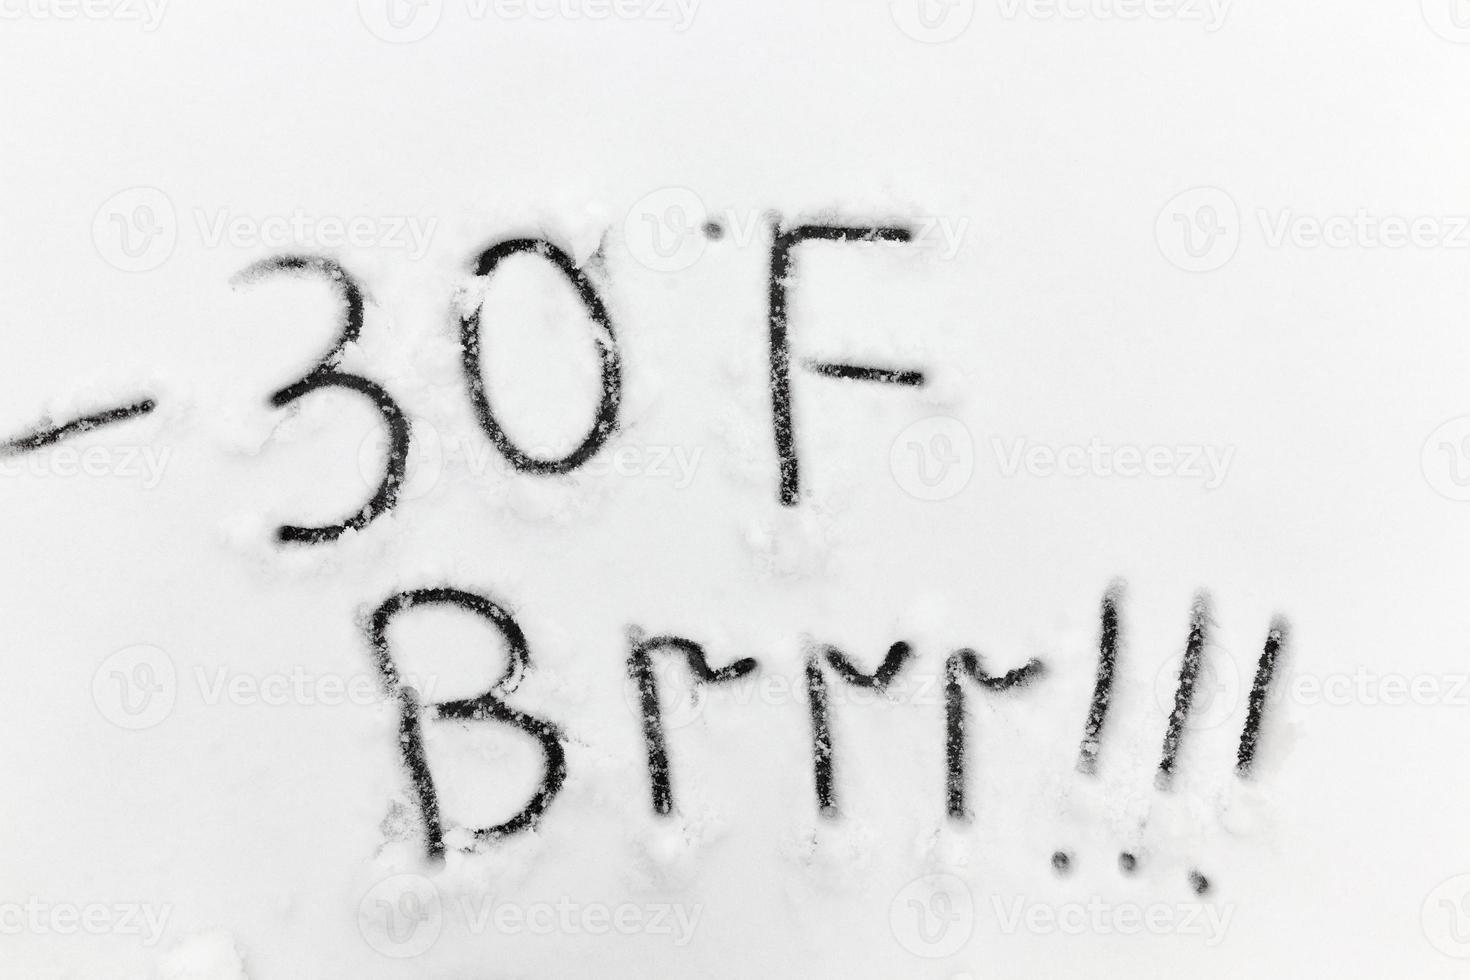 drawn on the snow, temperature symbols denoting negative very cold weather photo